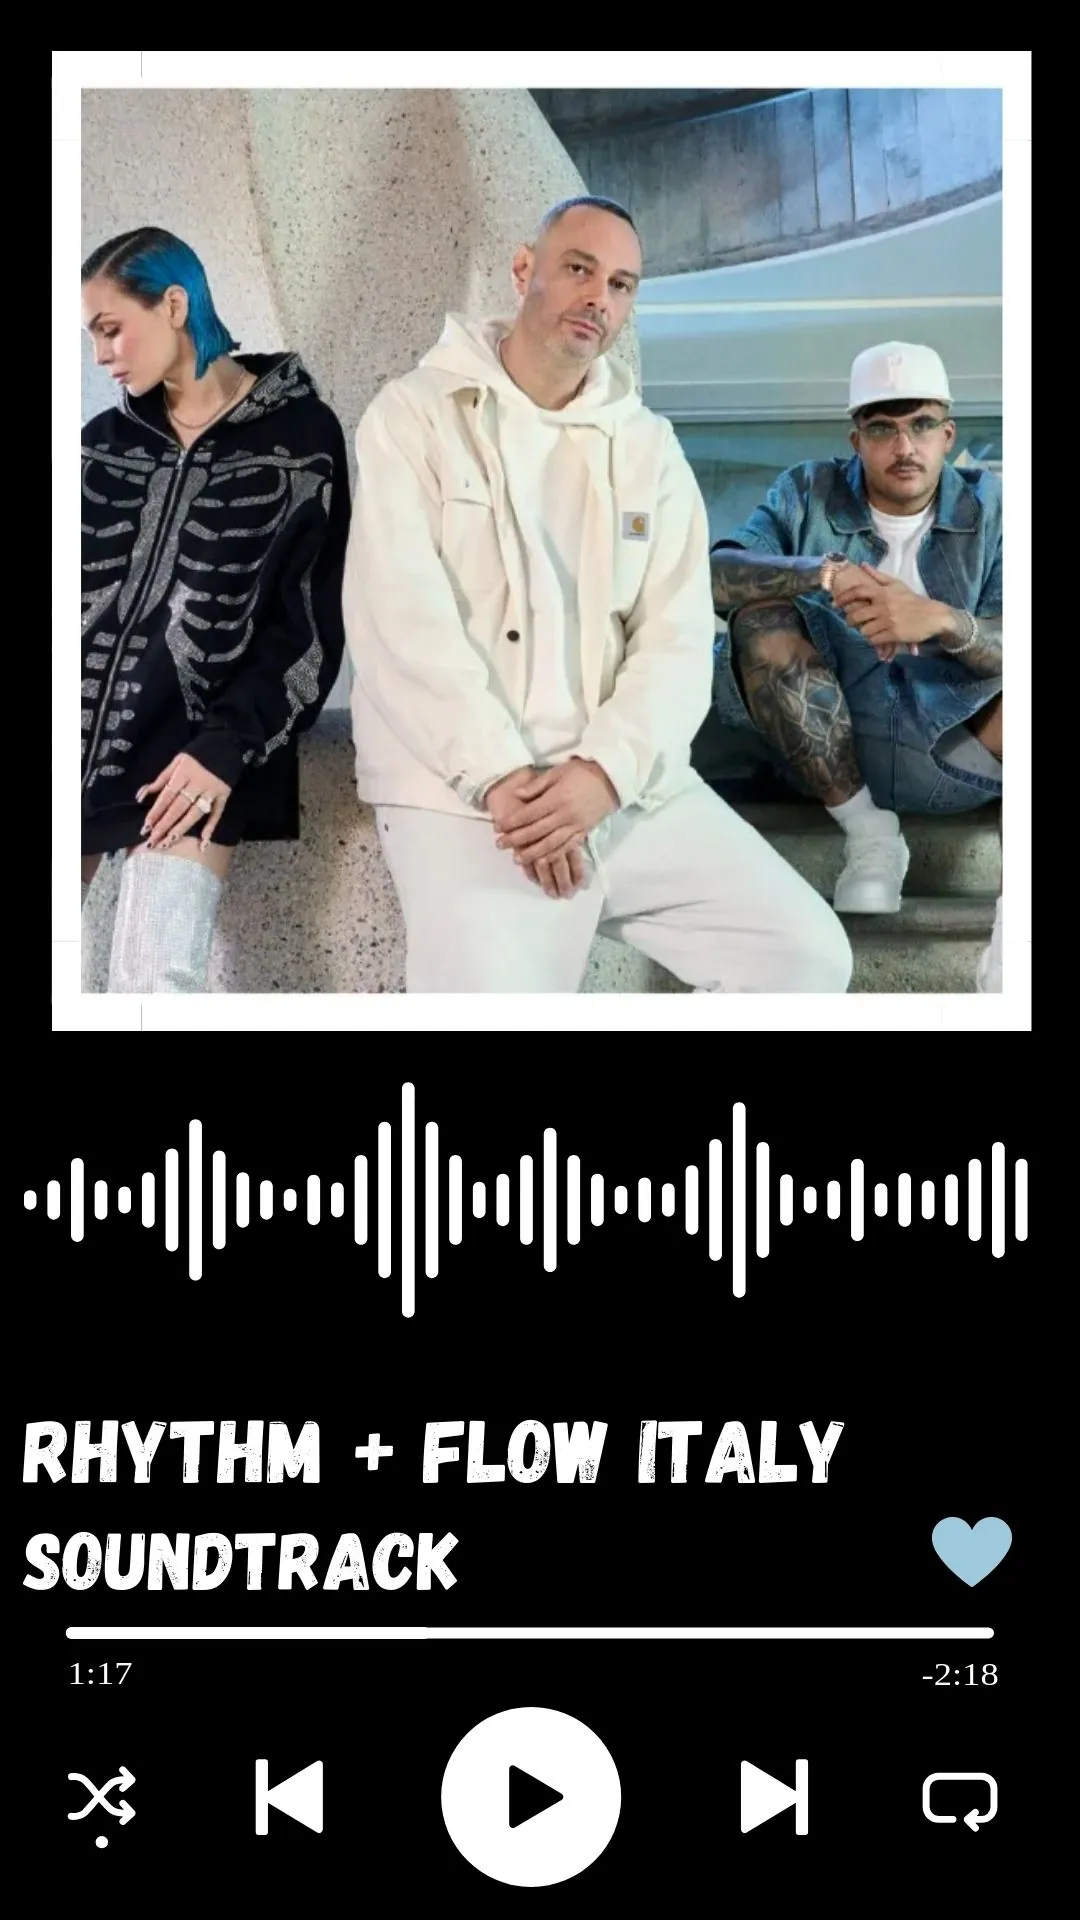 Rhythm + Flow Italy Soundtrack